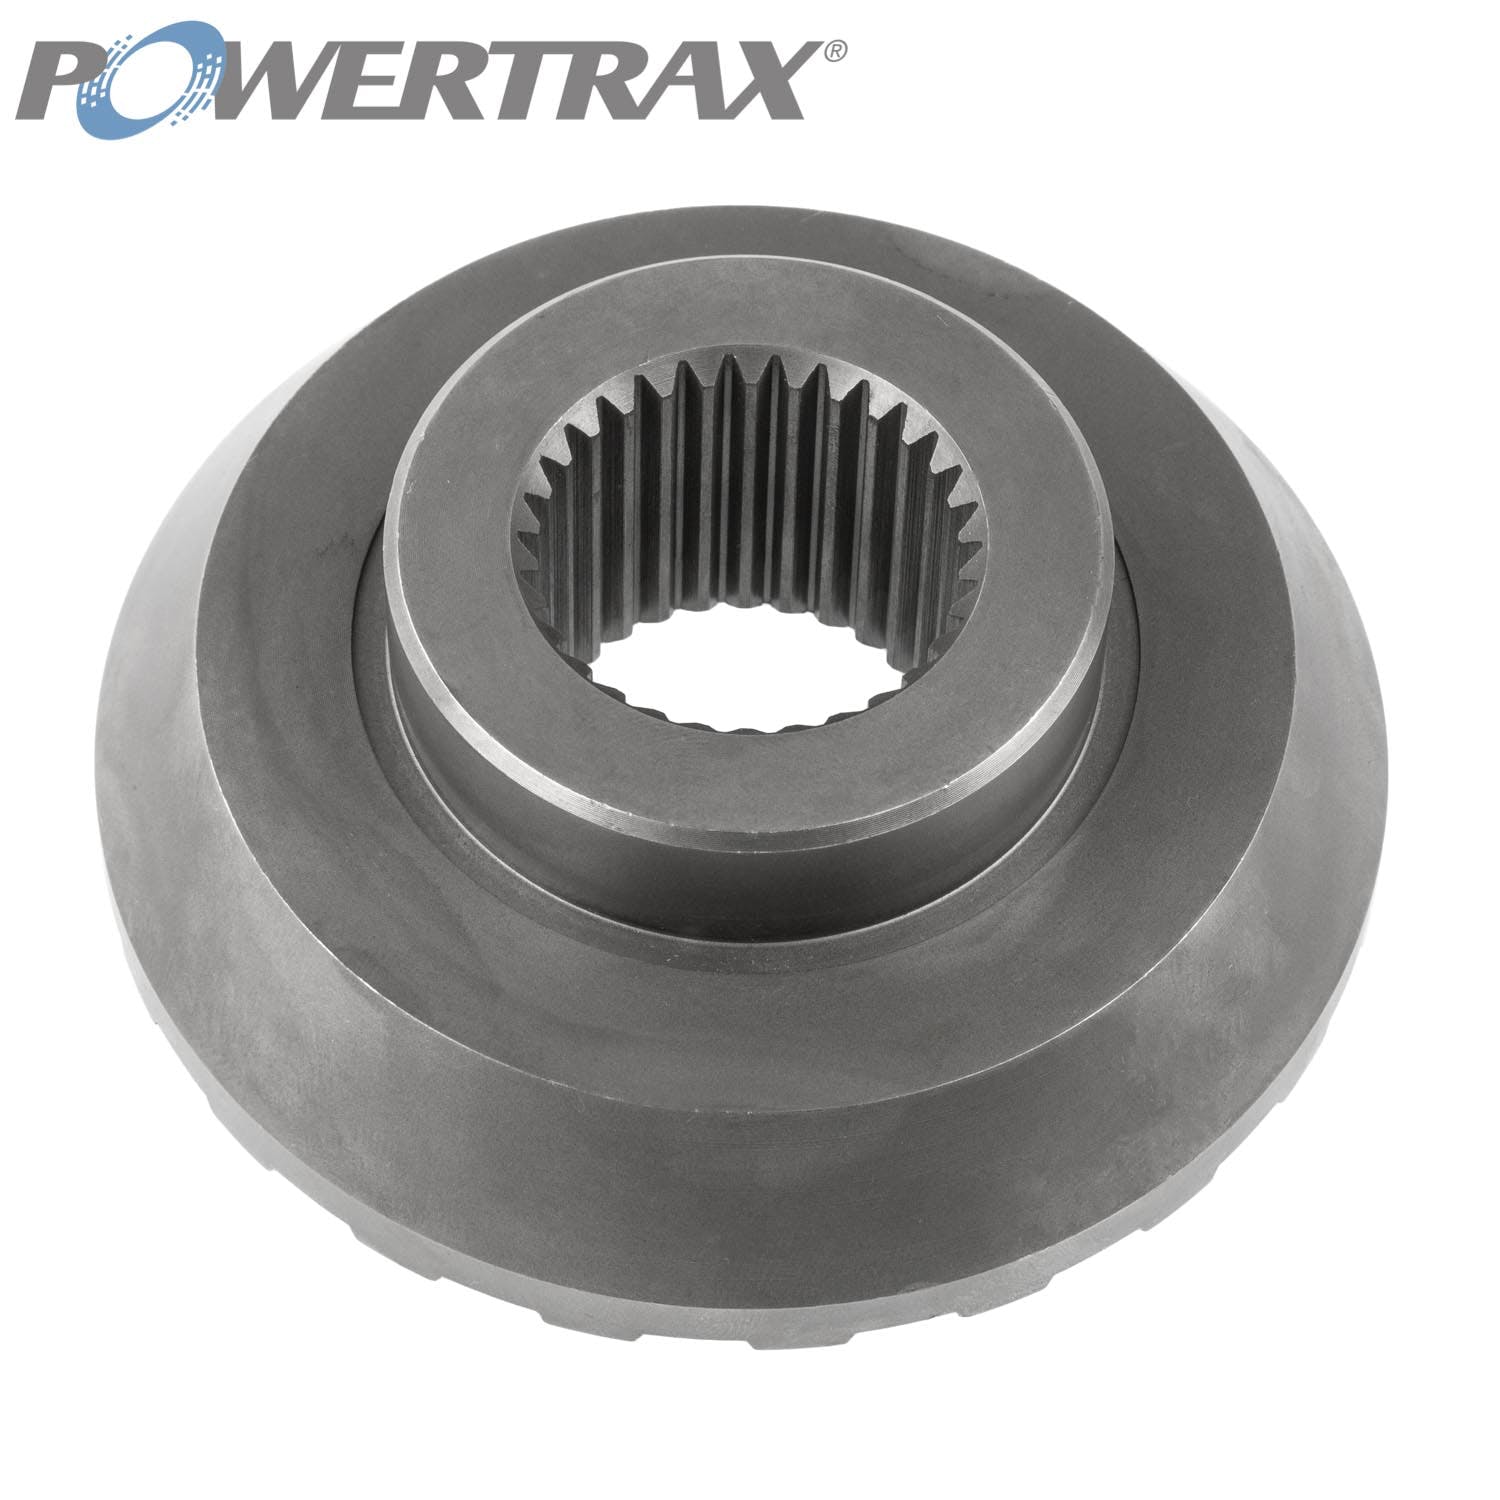 PowerTrax 2610504CAW Coupler